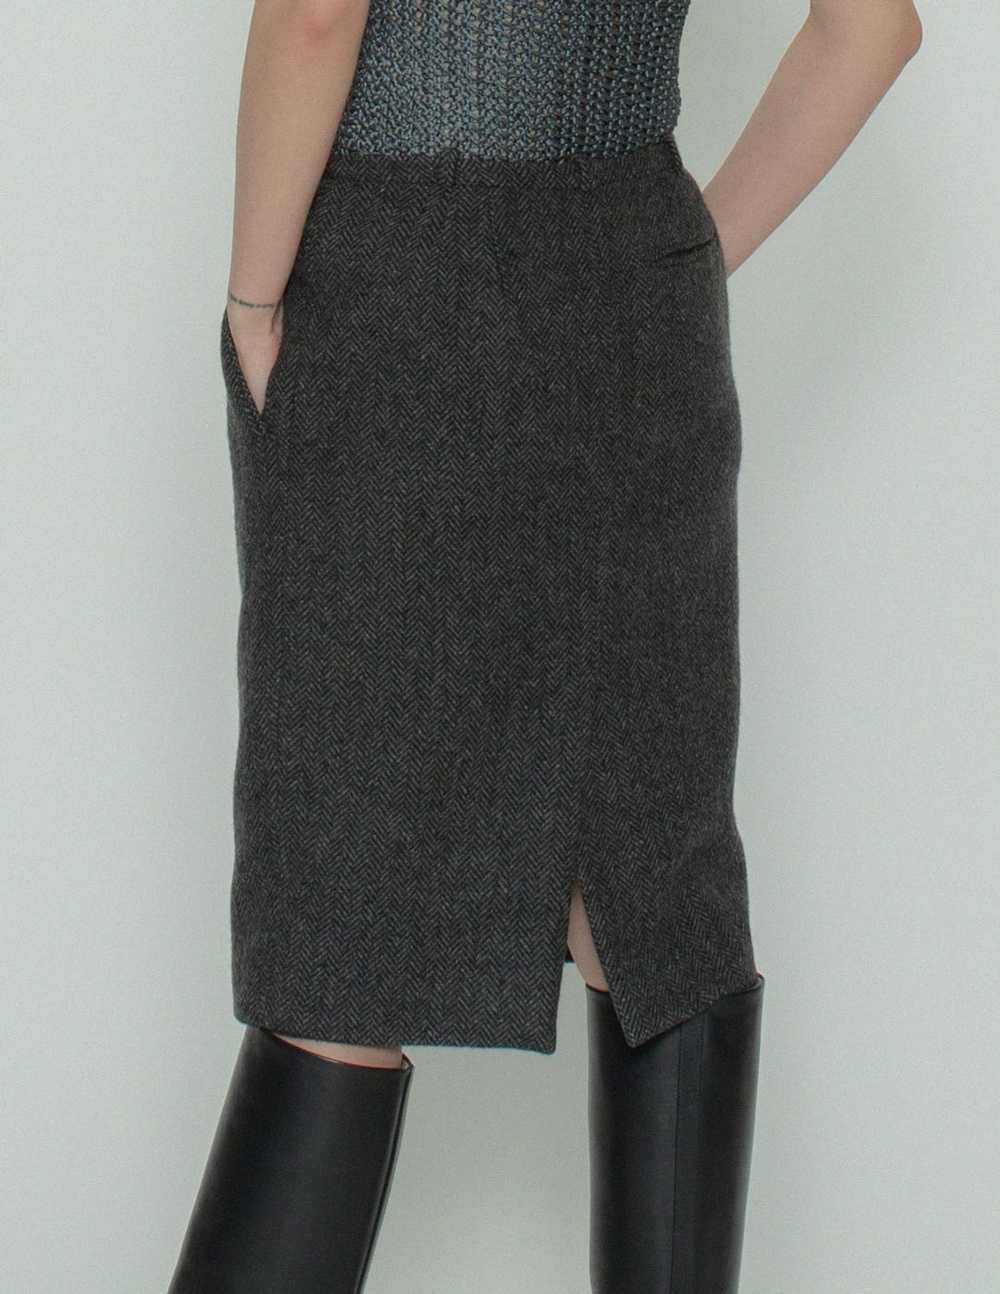 Hermès chevron cashmere skirt - image 5